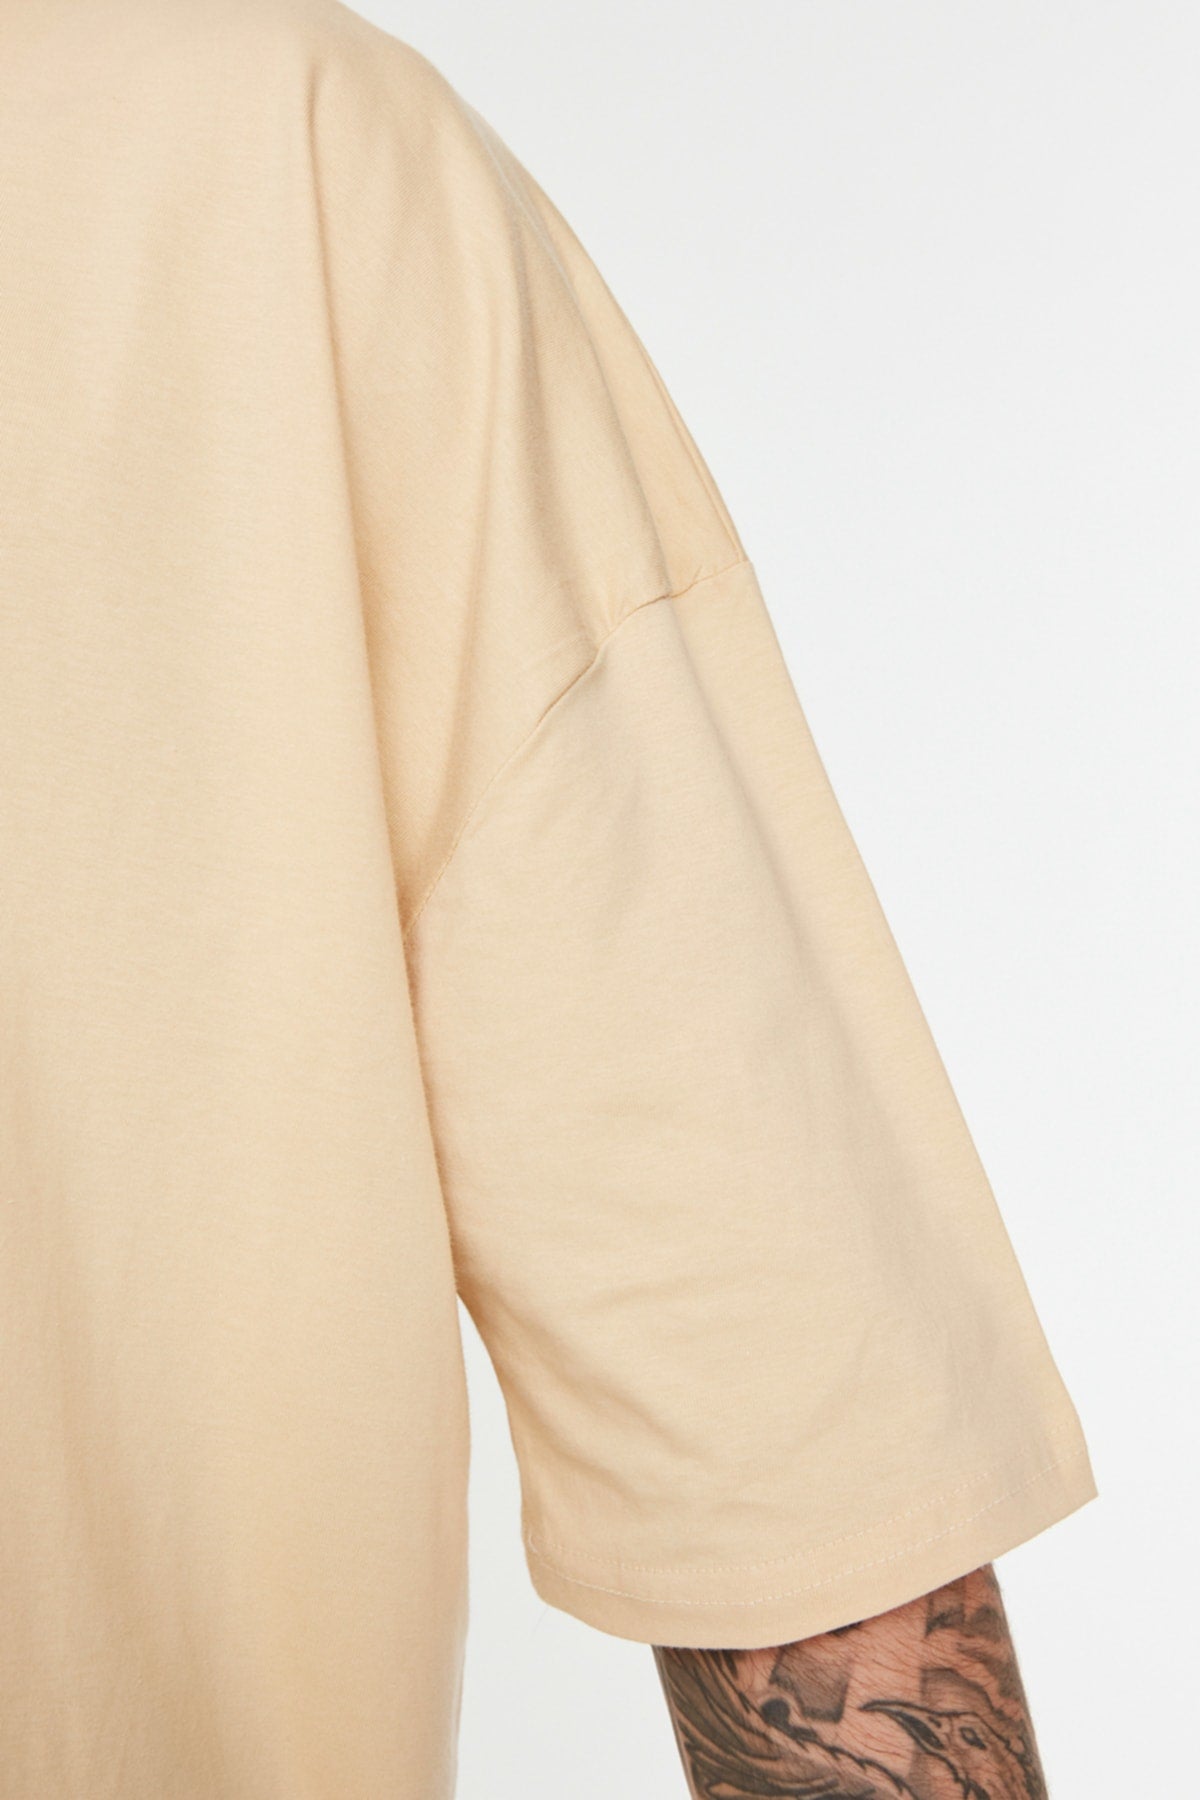 Beige Men's Basic 100% Cotton Crew Neck Oversize Short Sleeve T-Shirt TMNSS22TS0318